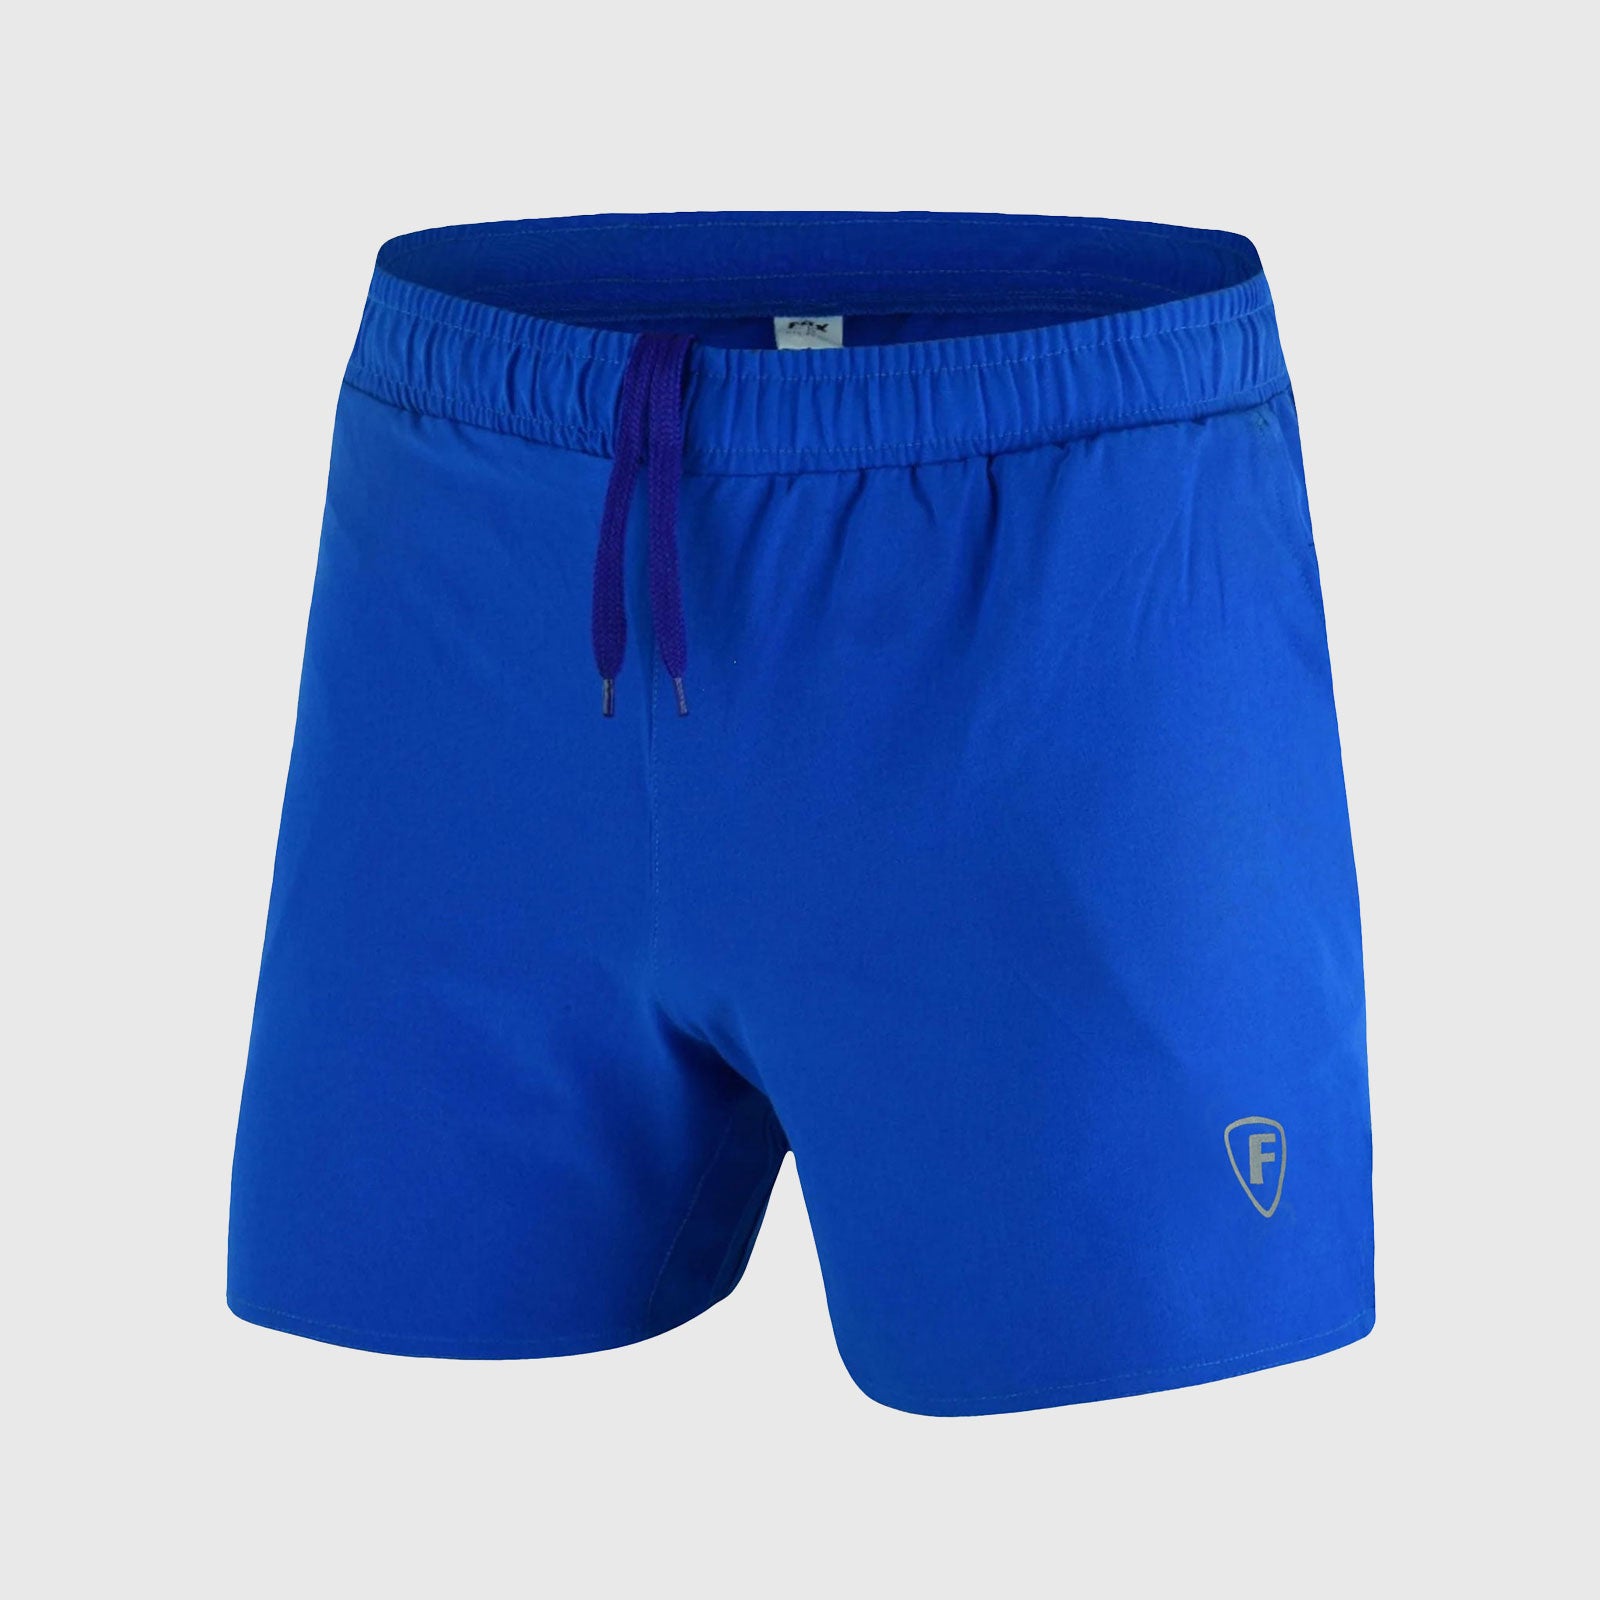 FDX Men's Blue Breathable Running Shorts Waist Belt Anti Odor Moisture Wicking & Perfect for Trekking, Tennis, squash & Gym Sports & Outdoor